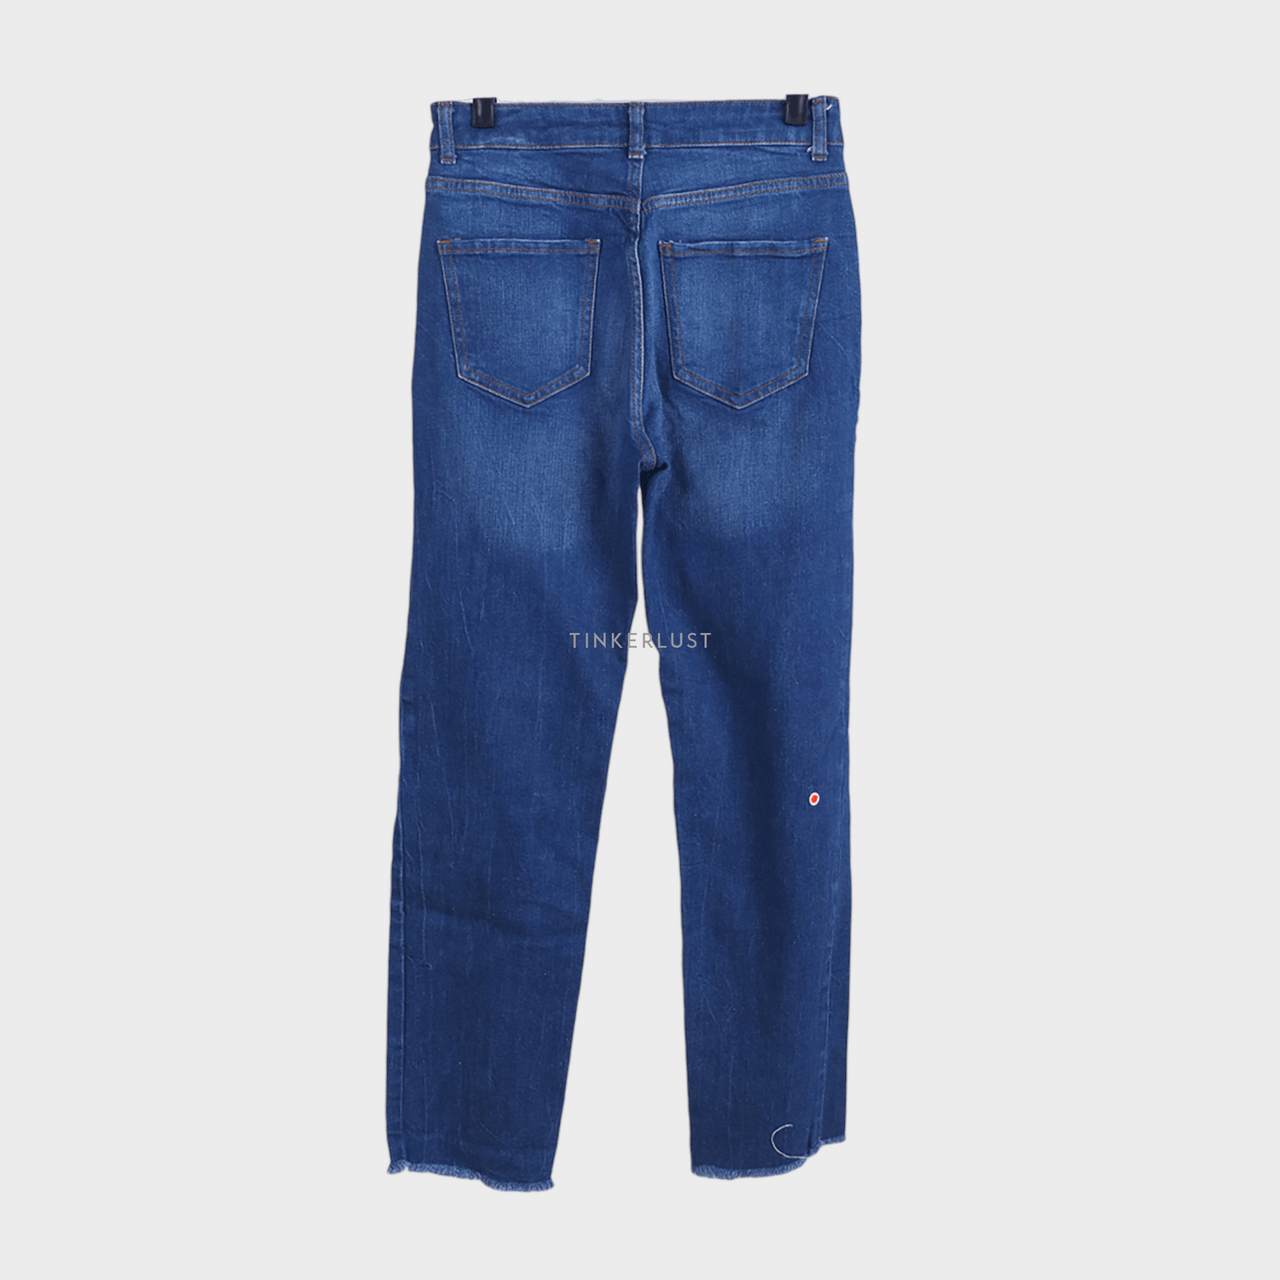 Marks & Spencer Blue Straight Jeans Long Pants